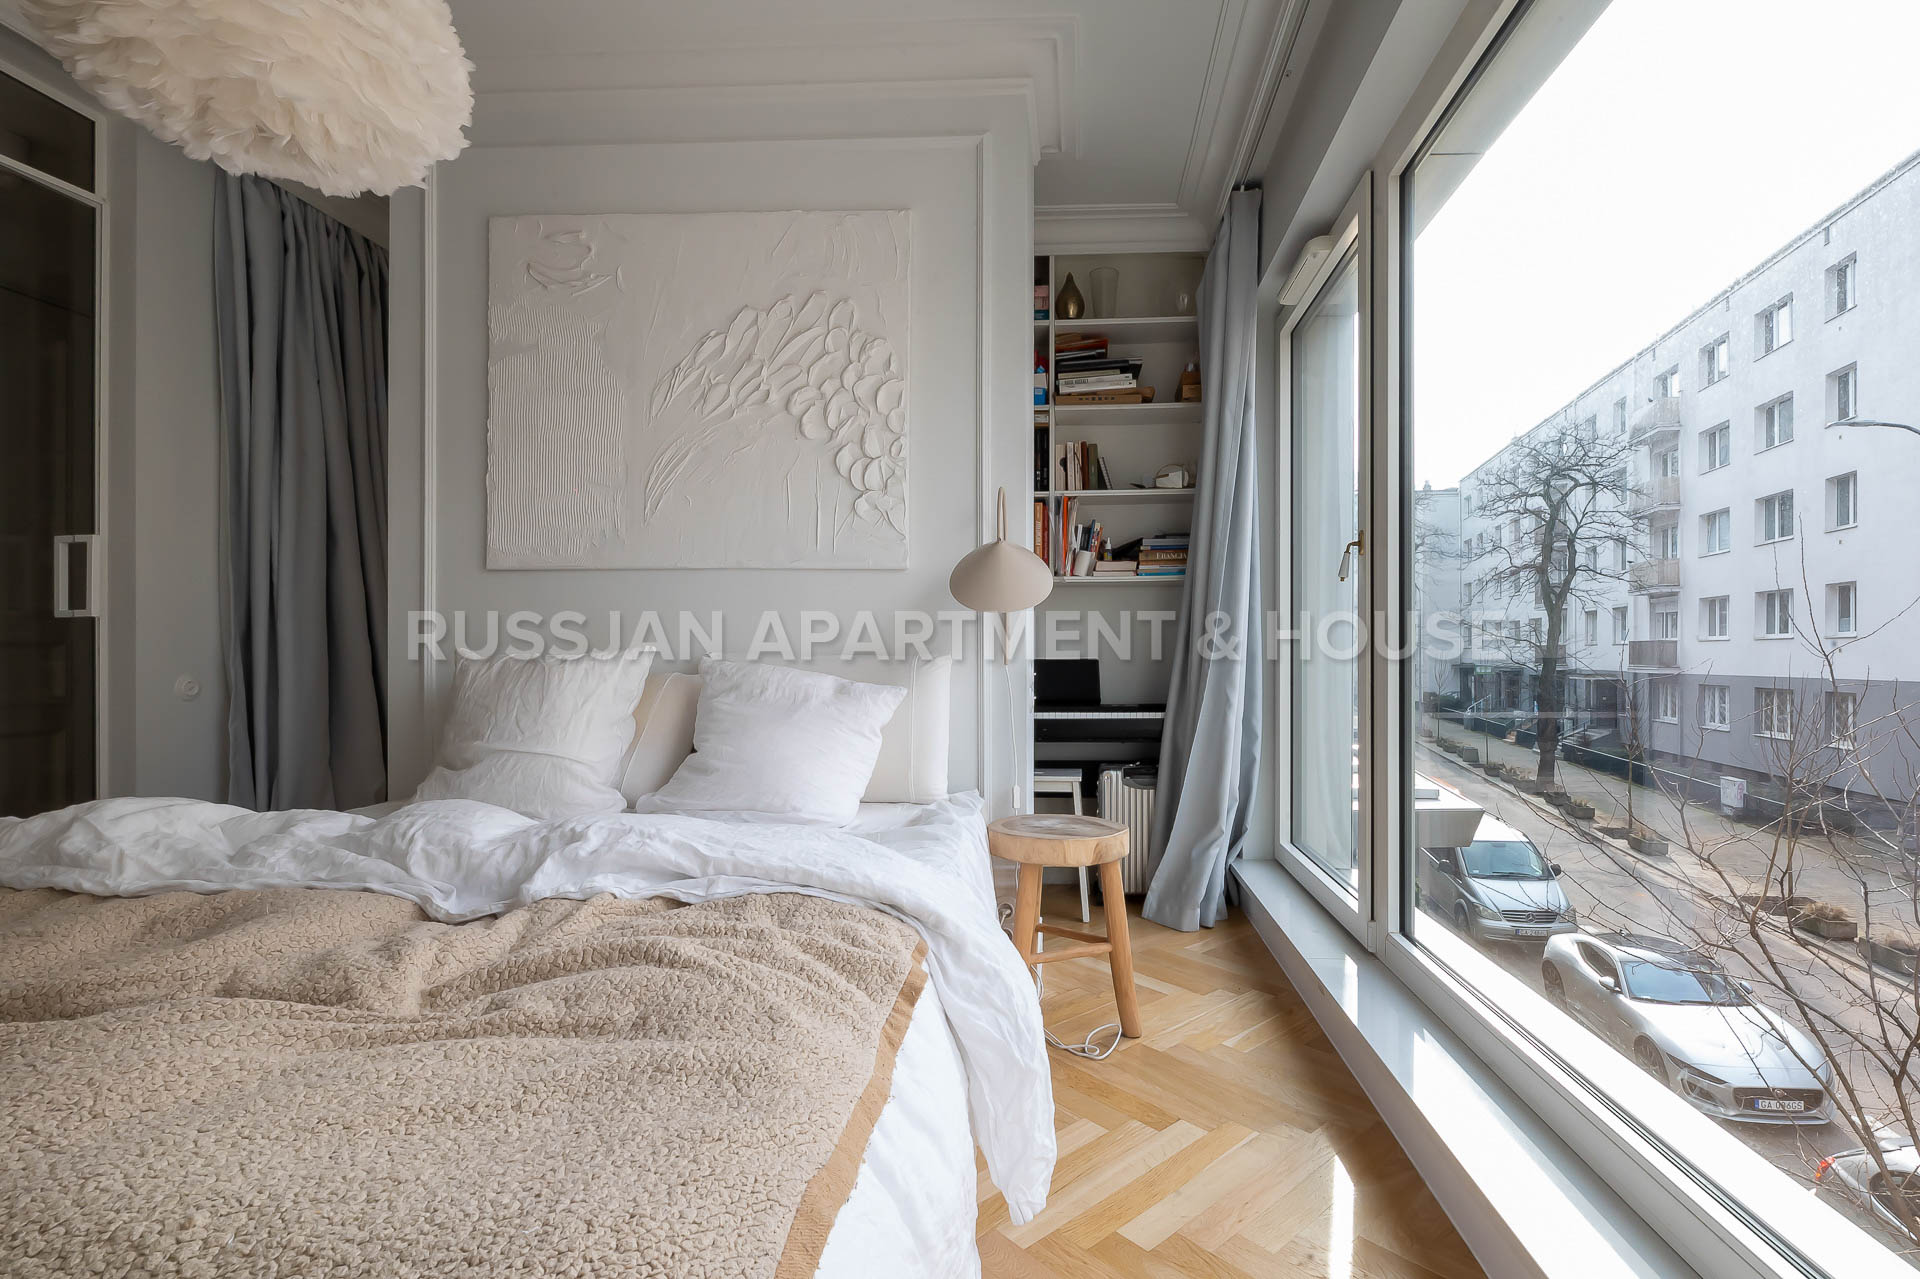  Ulica Zygmunta Augusta | RUSSJAN Apartment & House